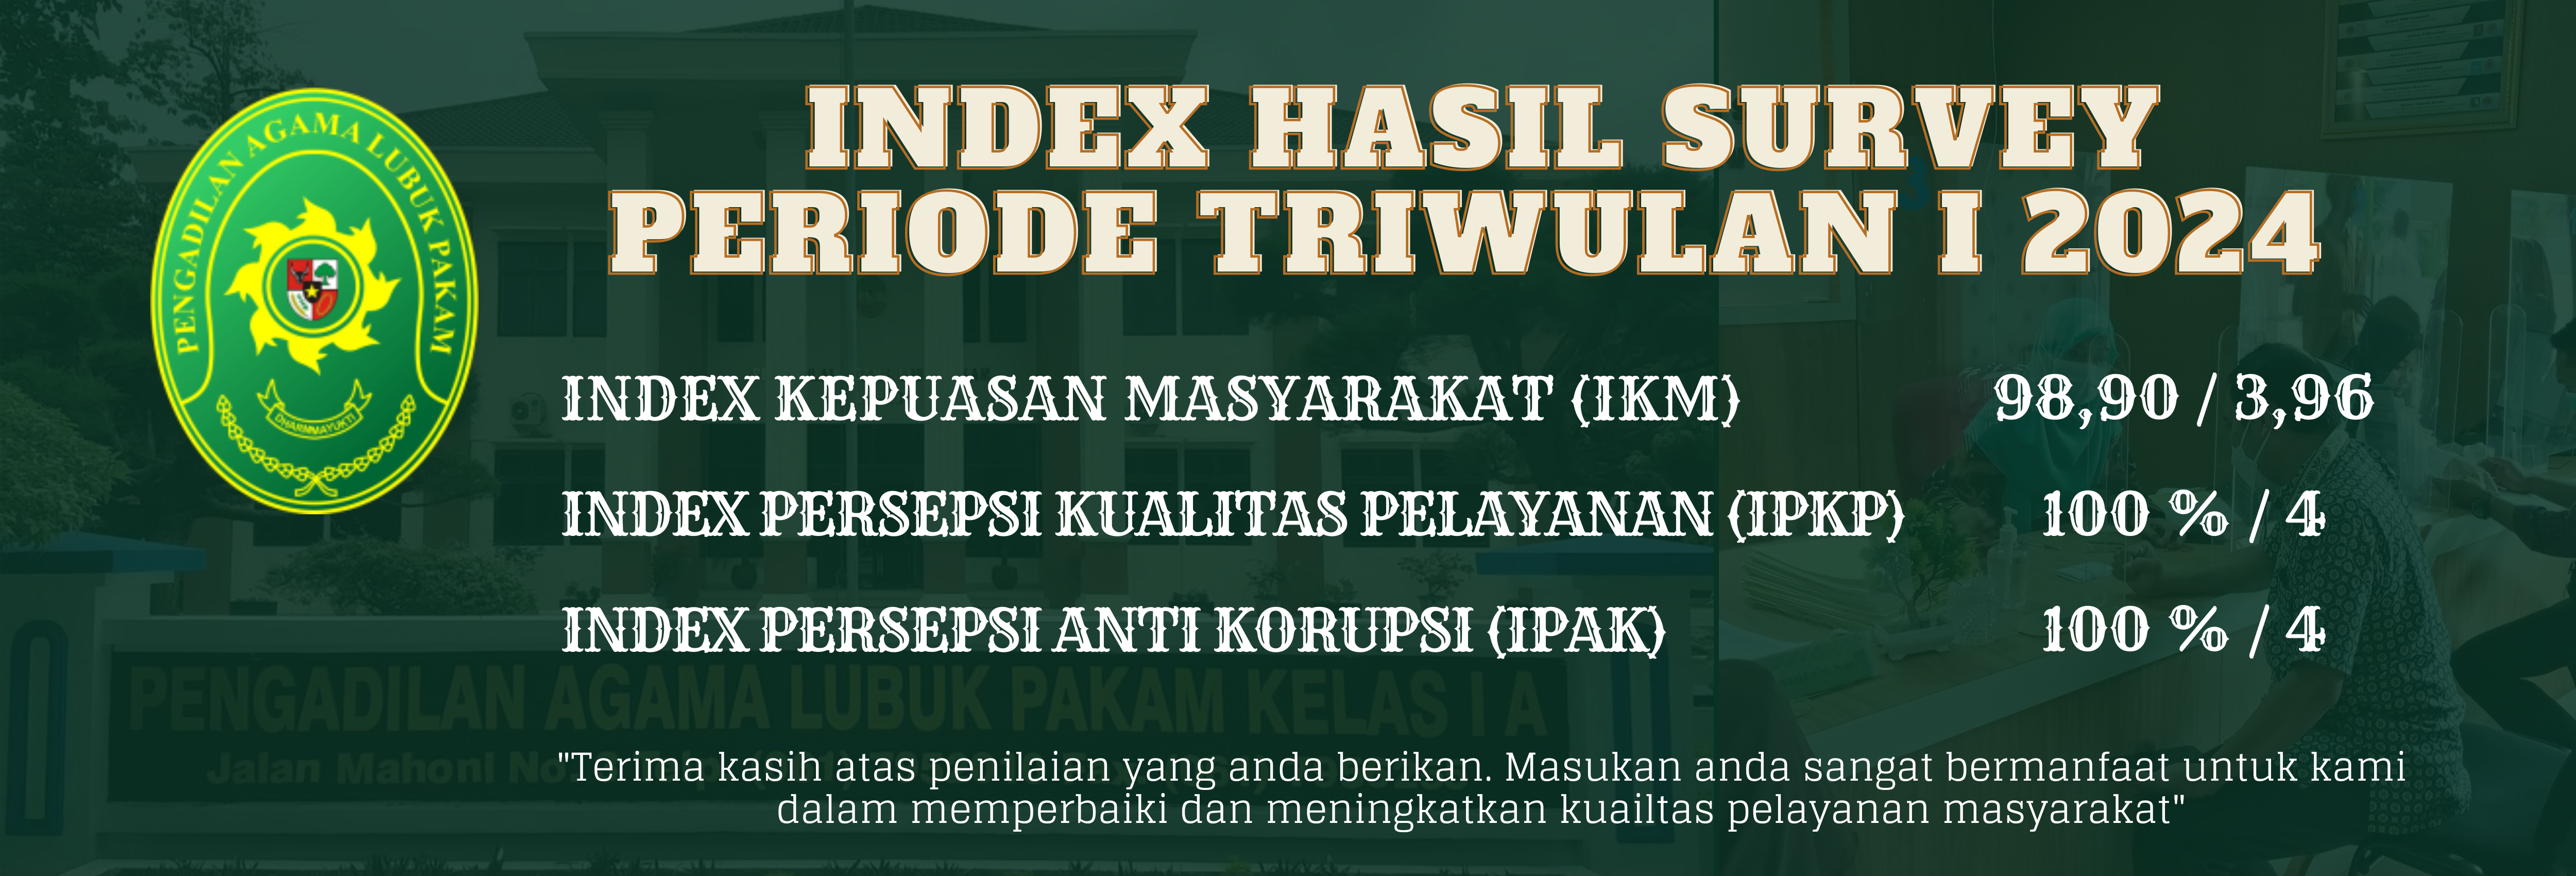 Index Hasil Survey TW I 2024